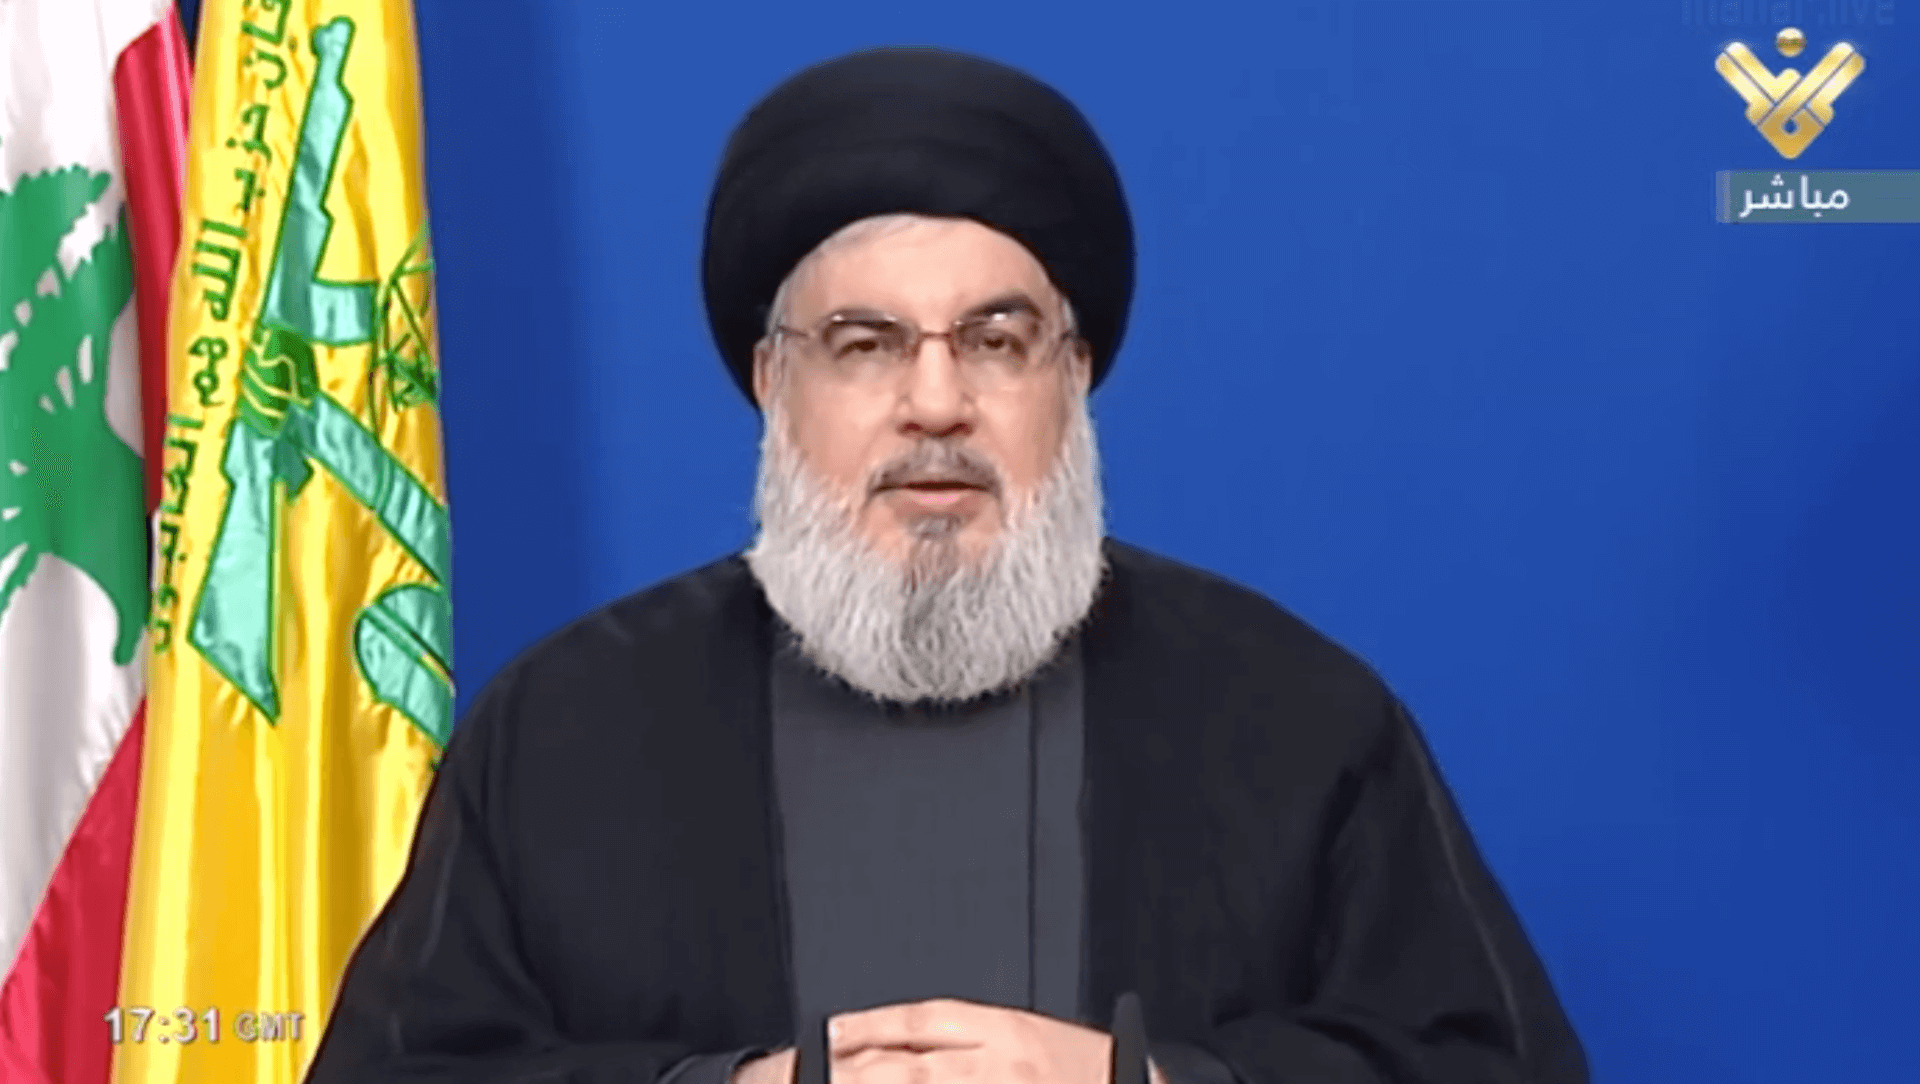 Hezbollah Chief Nasrallah Vows to Retaliate to Future Israeli Airstrikes